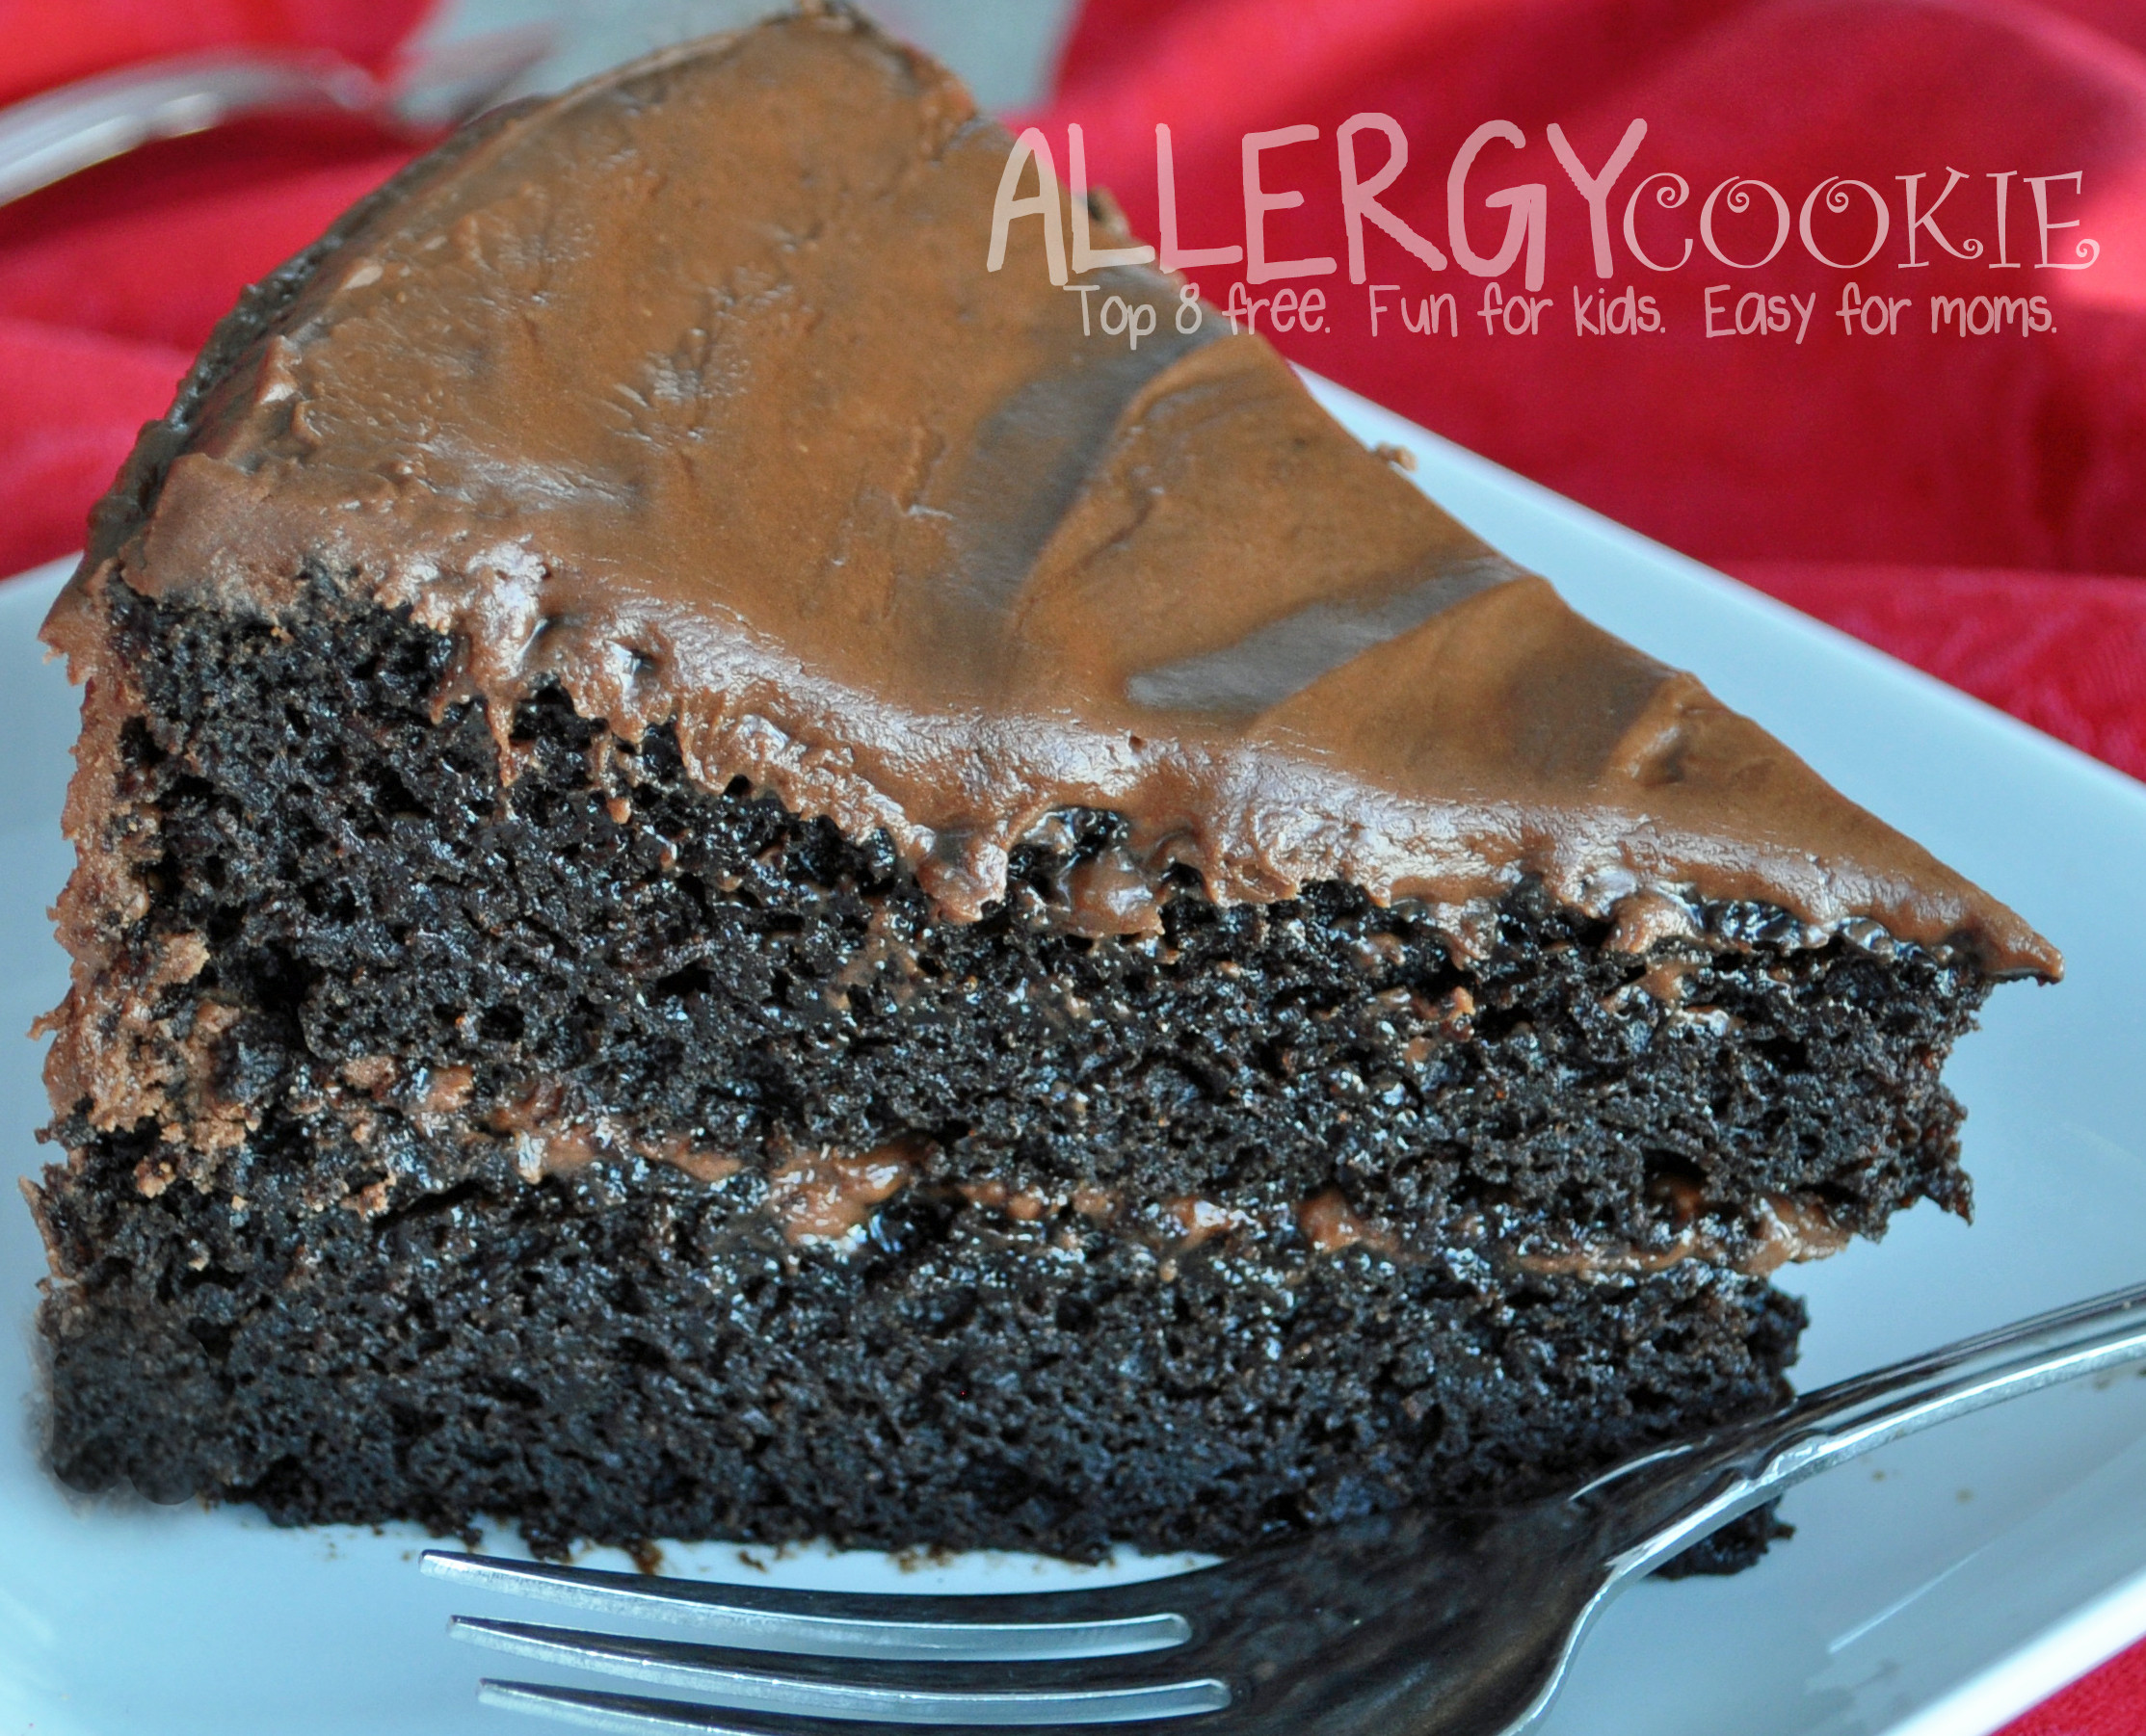 Dense Chocolate Cake Recipe
 Moist Dense Decadent Chocolate Cake top 8 free gluten